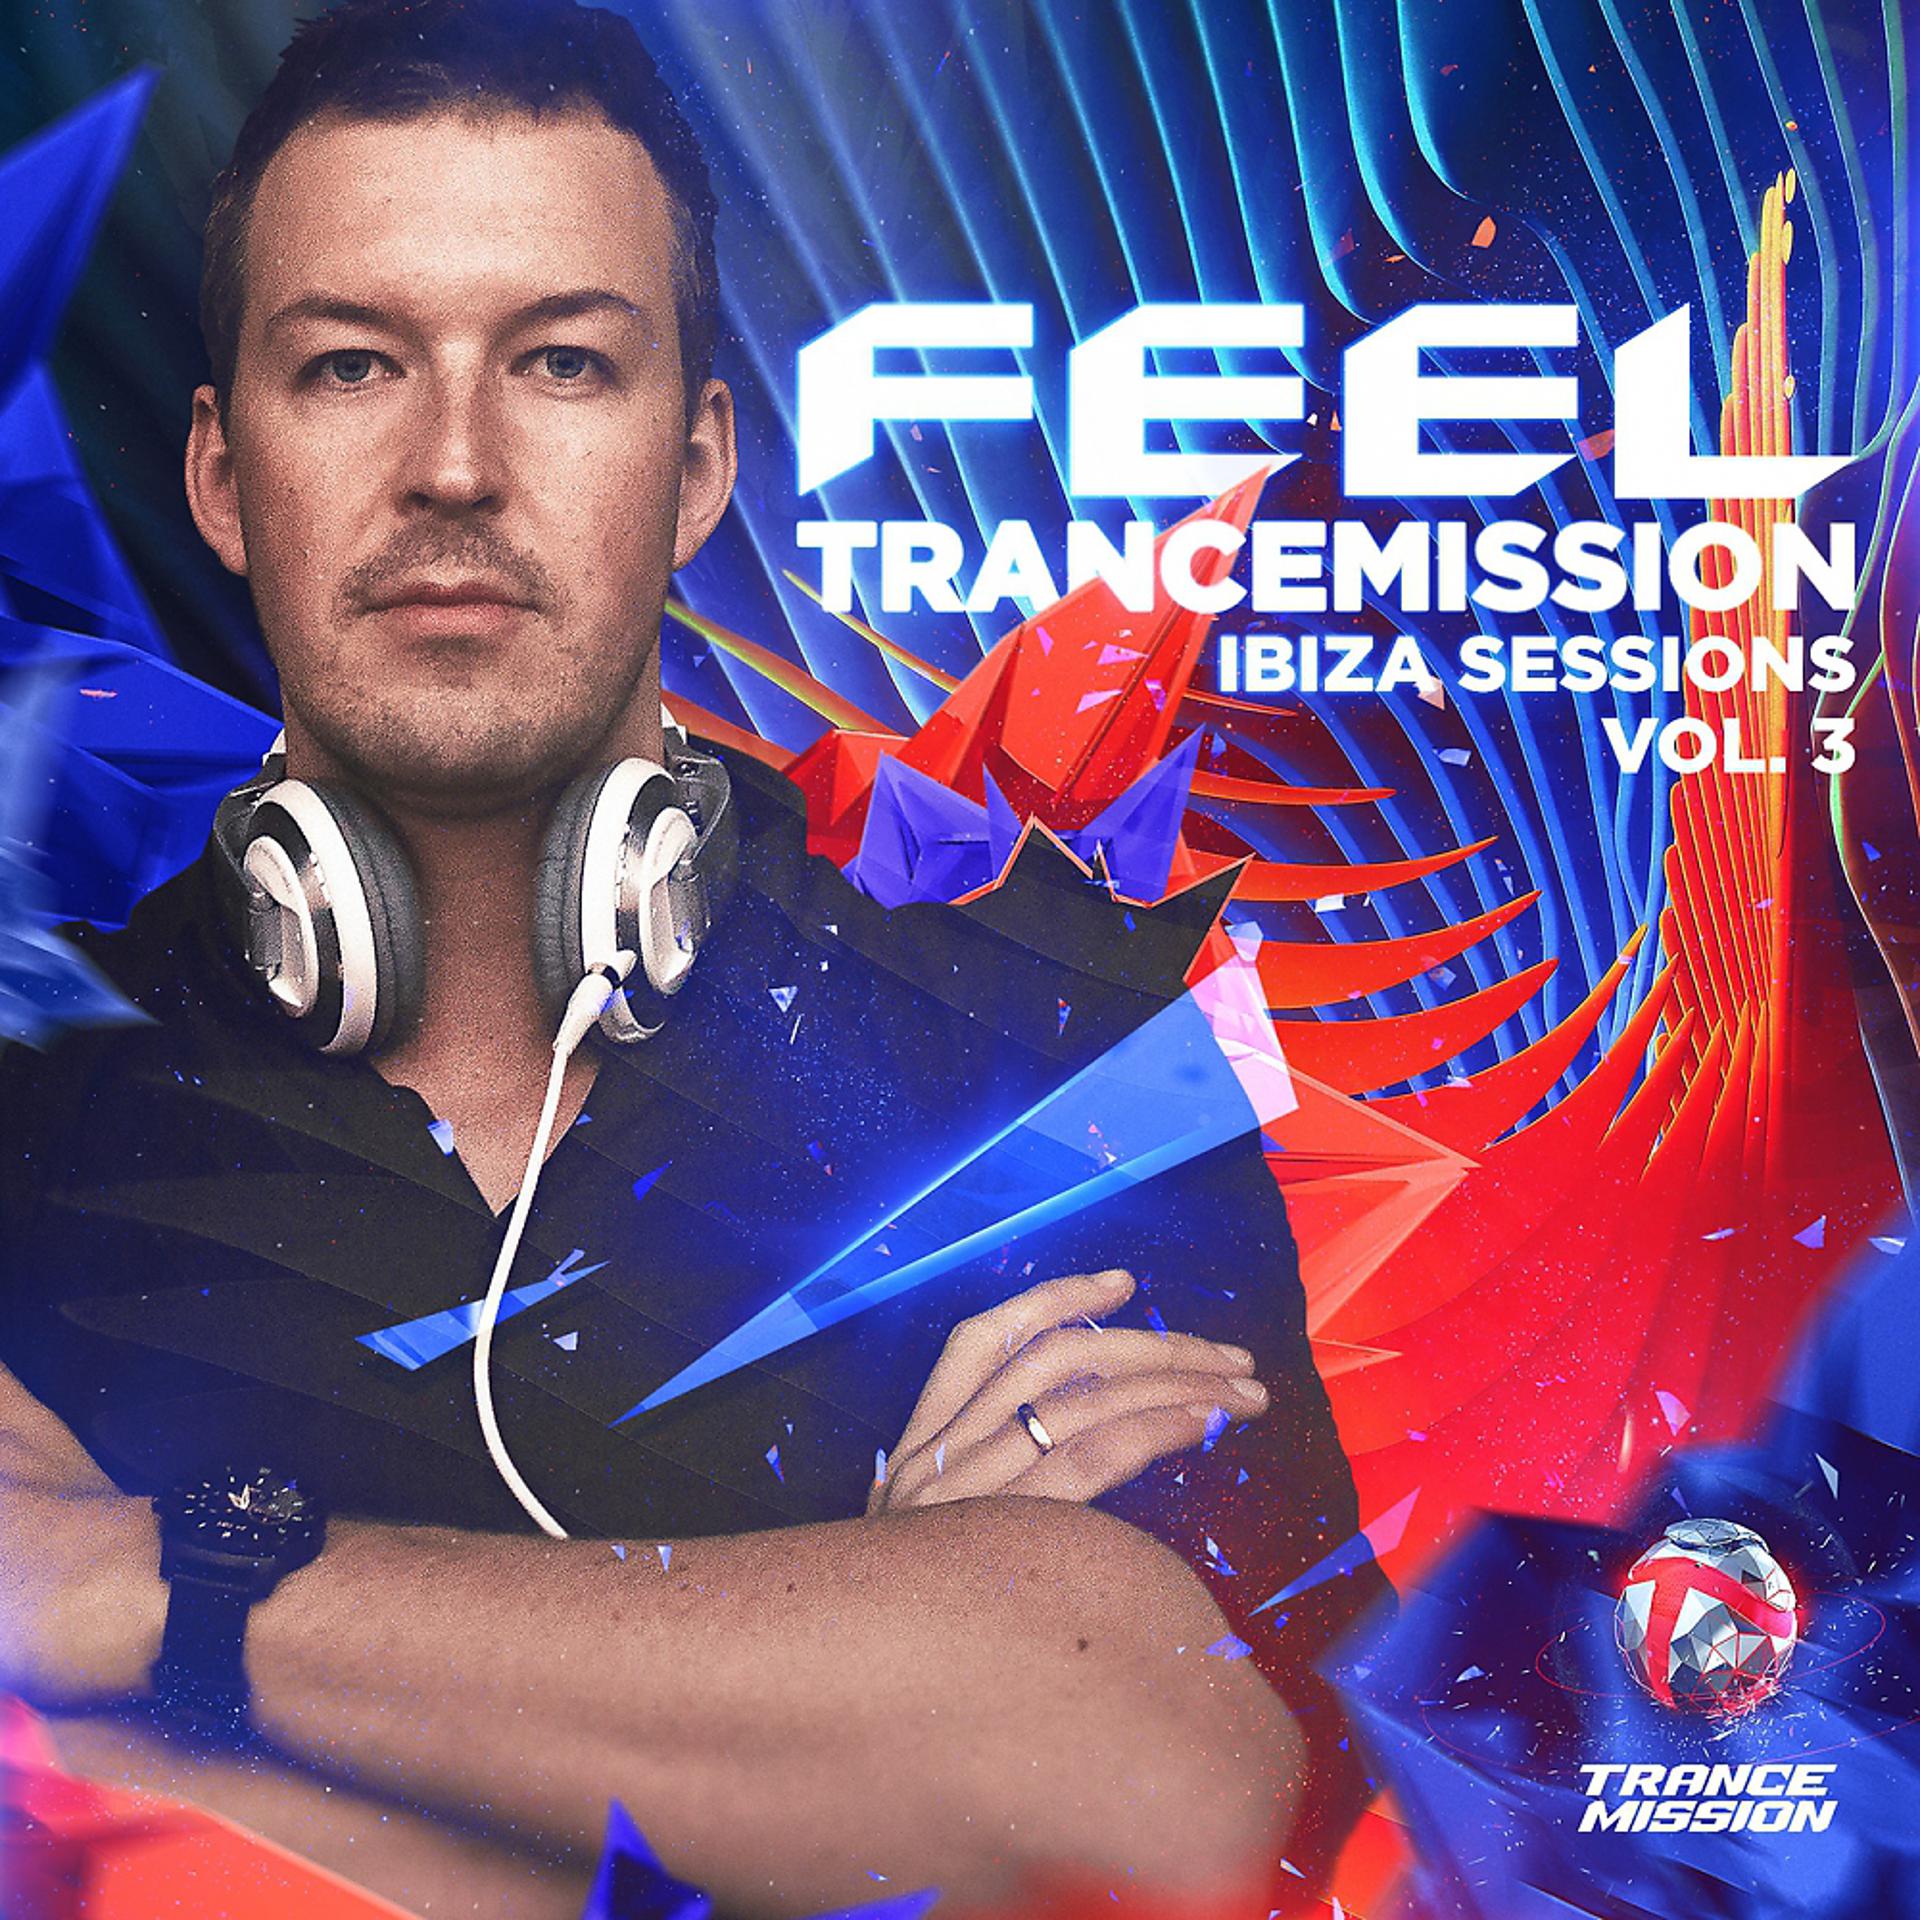 Dj feel mix. Ruslan Radriges Trancemission. Диджей Фил. DJ Trancemission. Трансмиссия Vol 3.